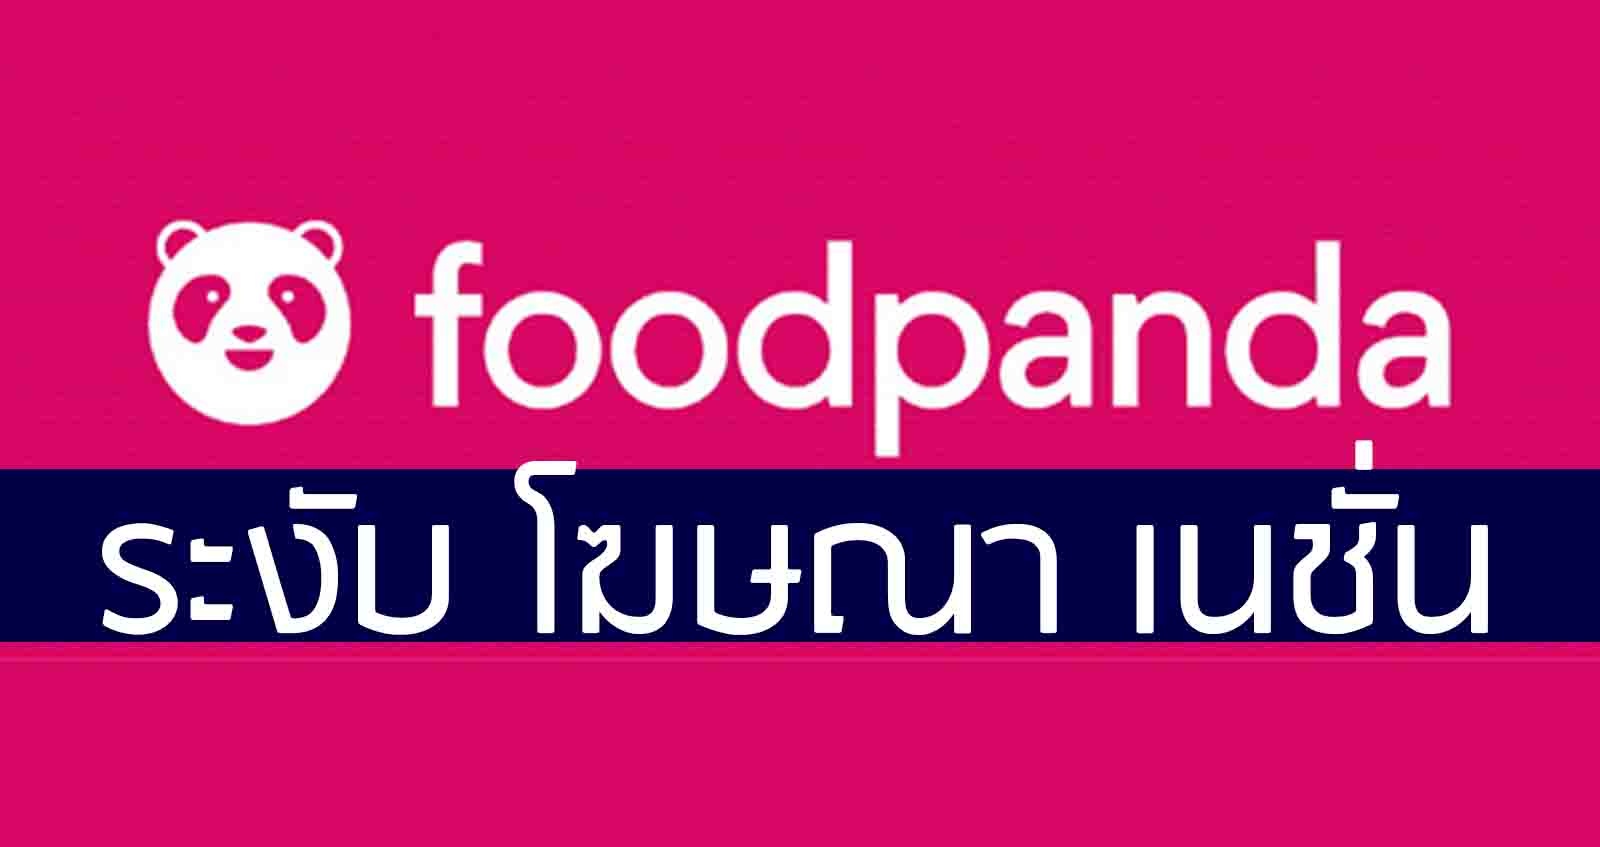 FoodPanda ระงับโฆษณา เนชั่นทีวี